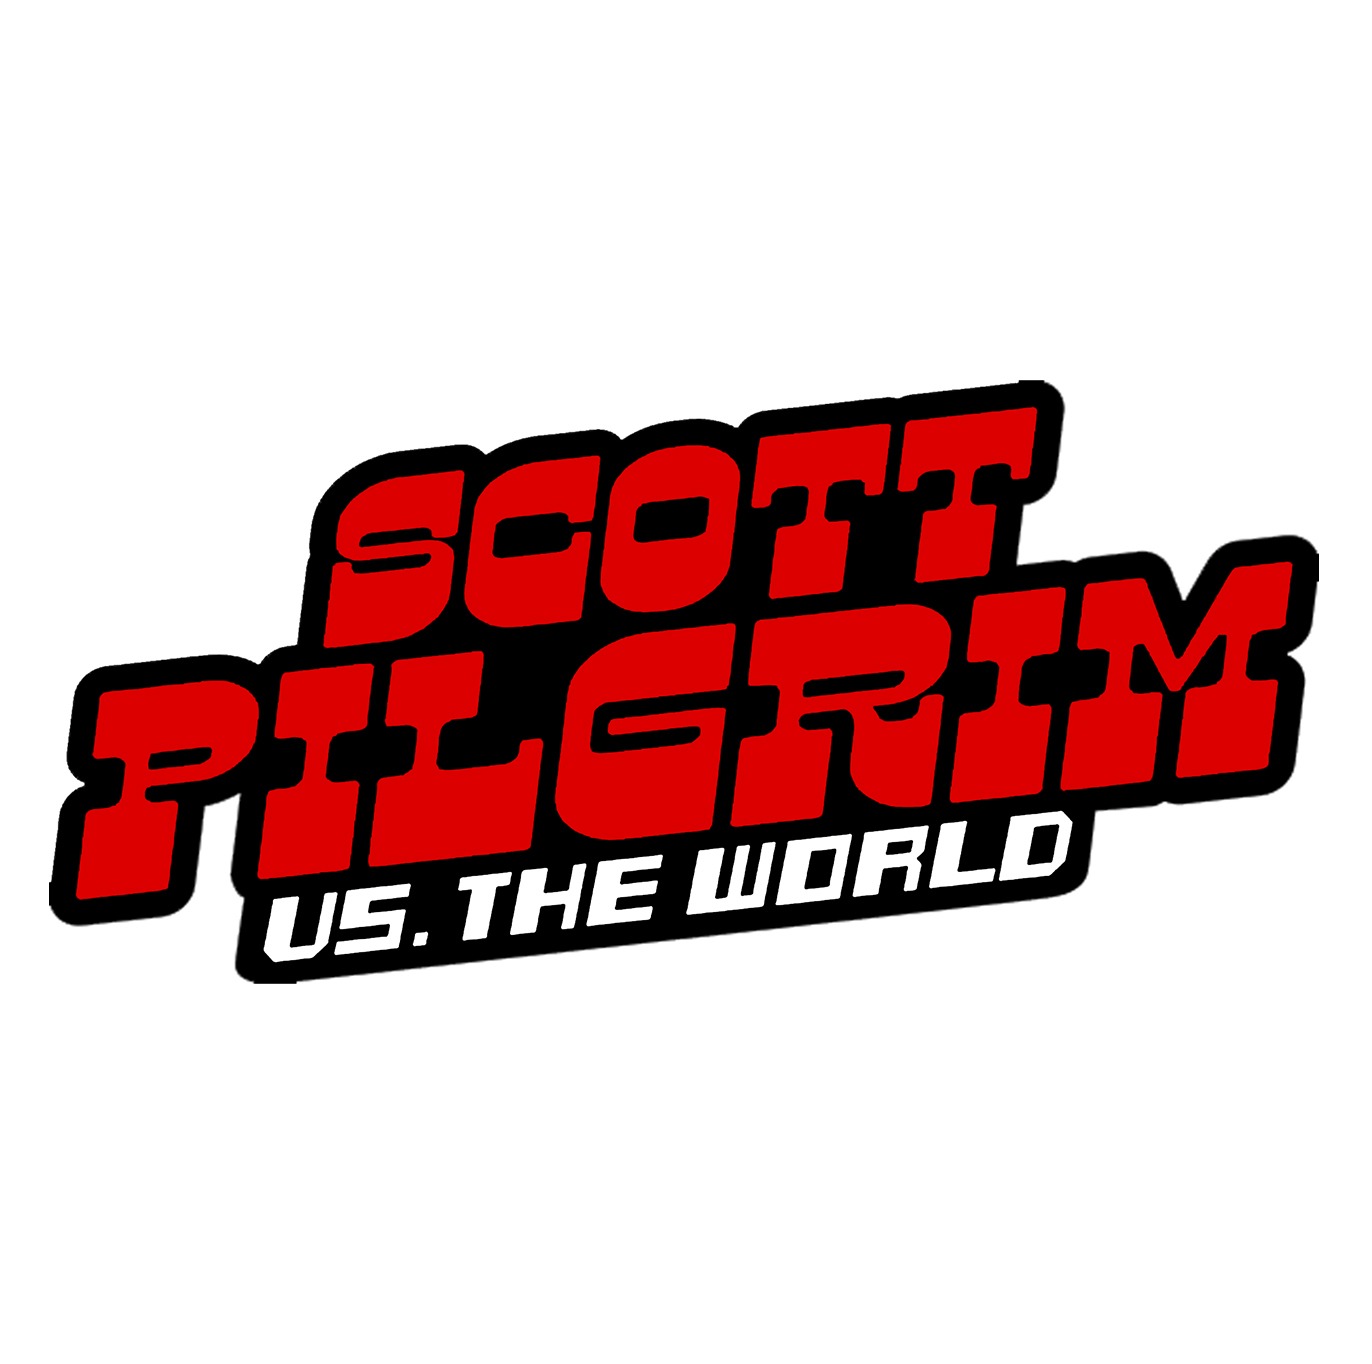 Scoott Pilgrim vs The World